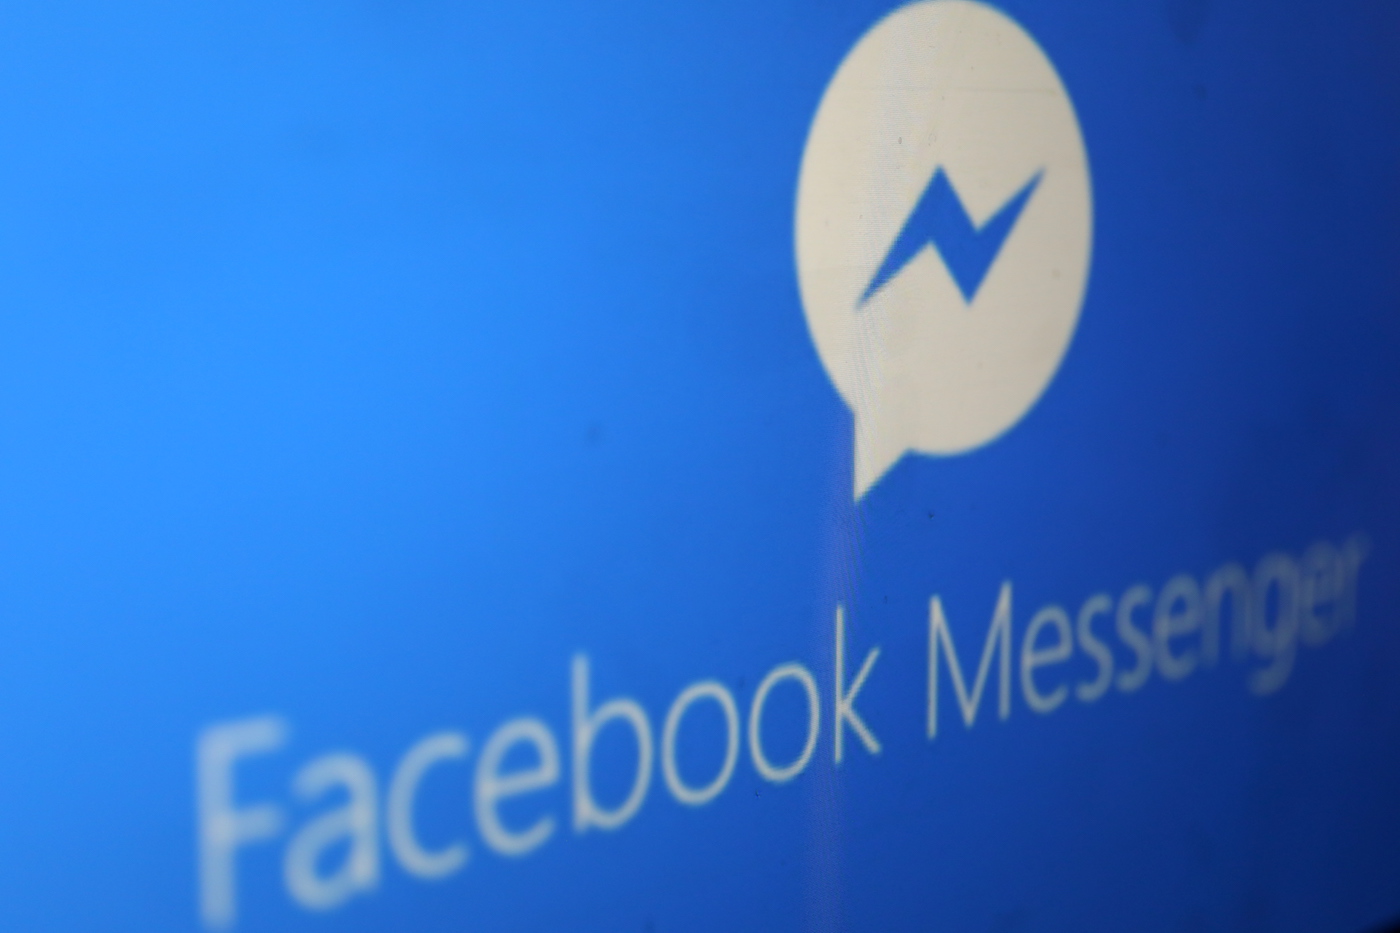 facebook messenger download voice message